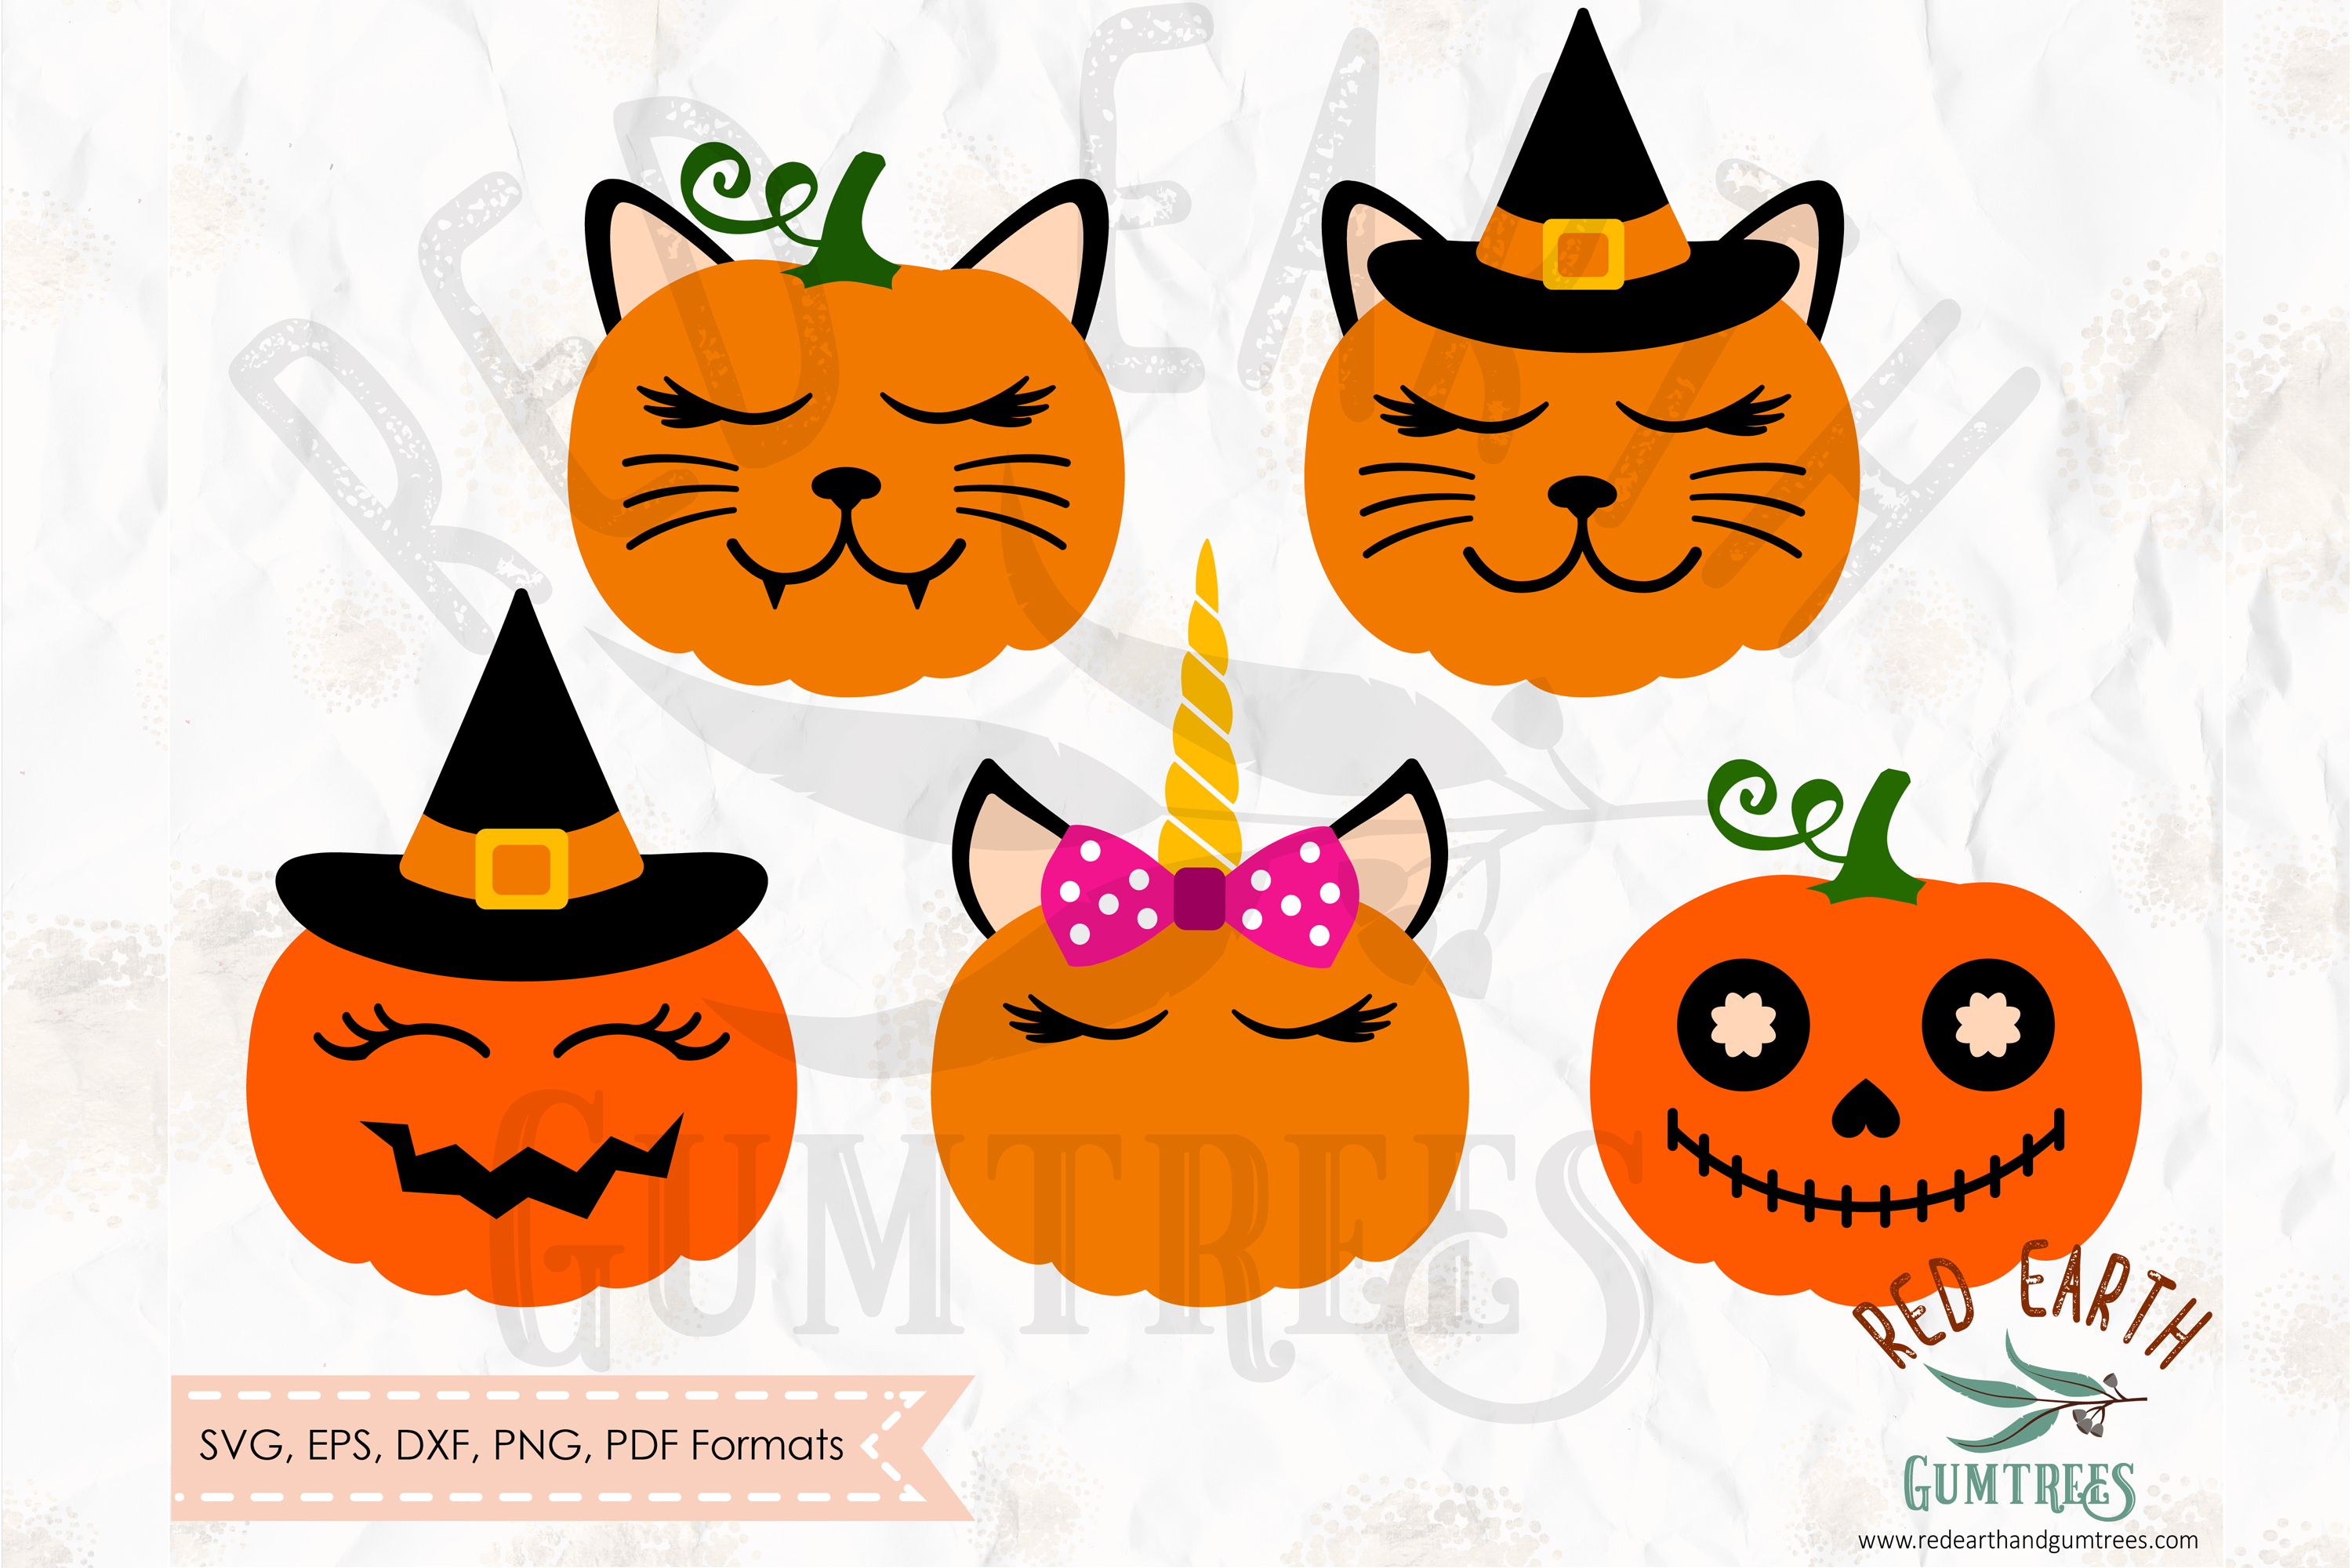 Download Pumpkin faces bundle, cute pumpkins in SVG,DXF,PNG,EPS,PDF